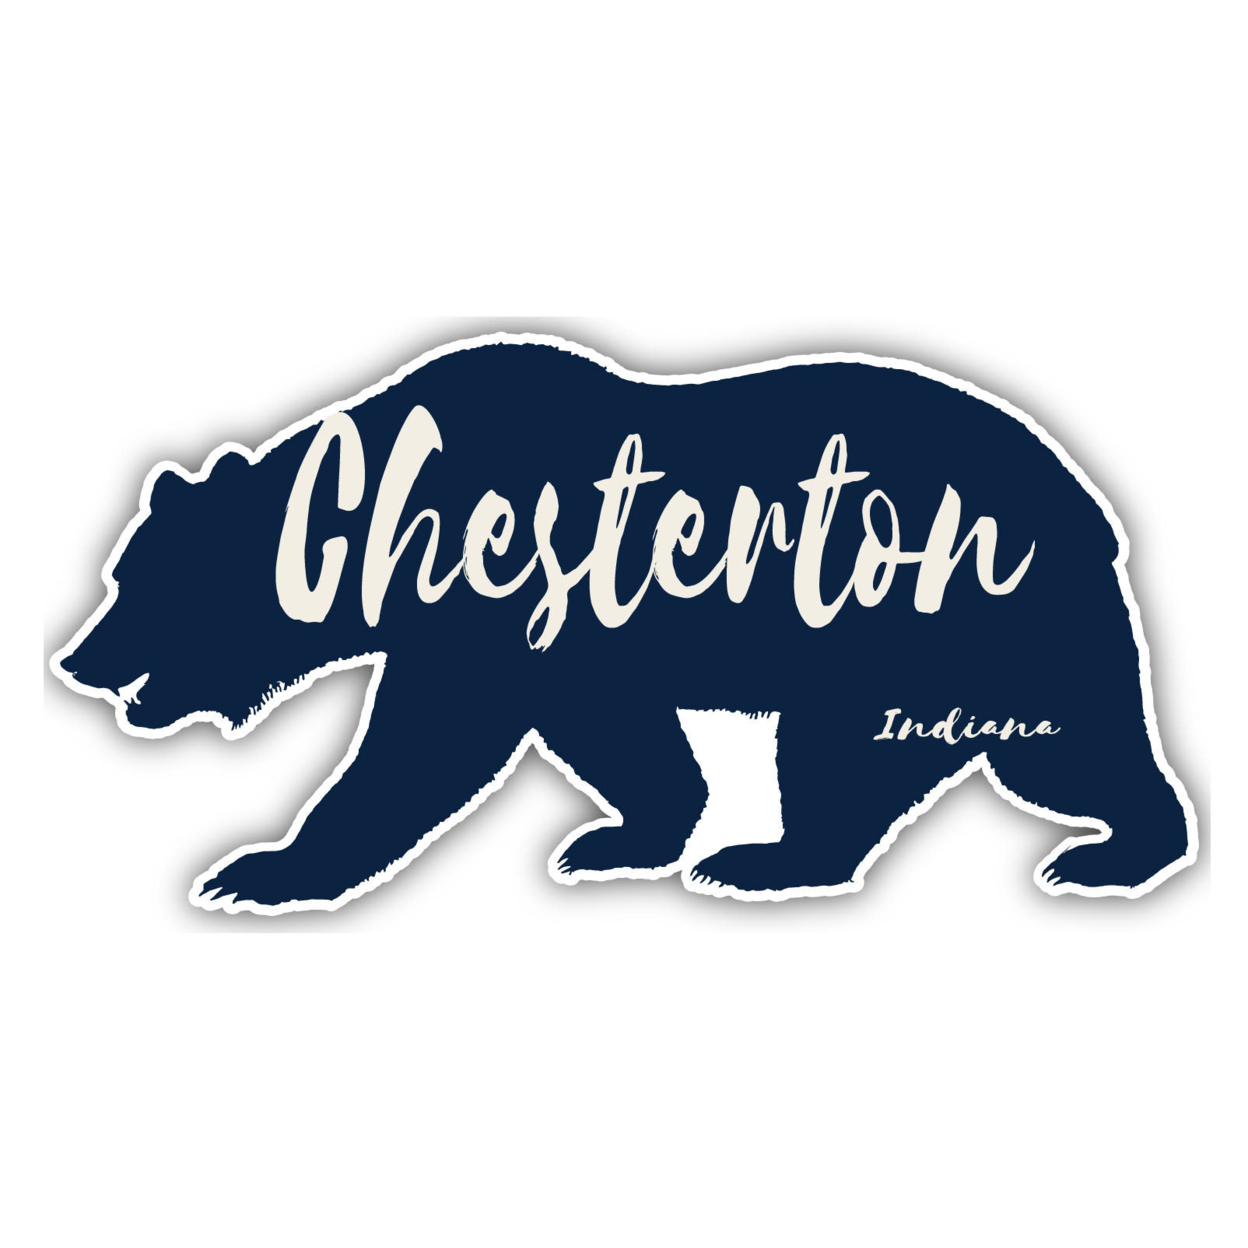 Chesterton Indiana Souvenir Decorative Stickers (Choose Theme And Size) - Single Unit, 12-Inch, Tent